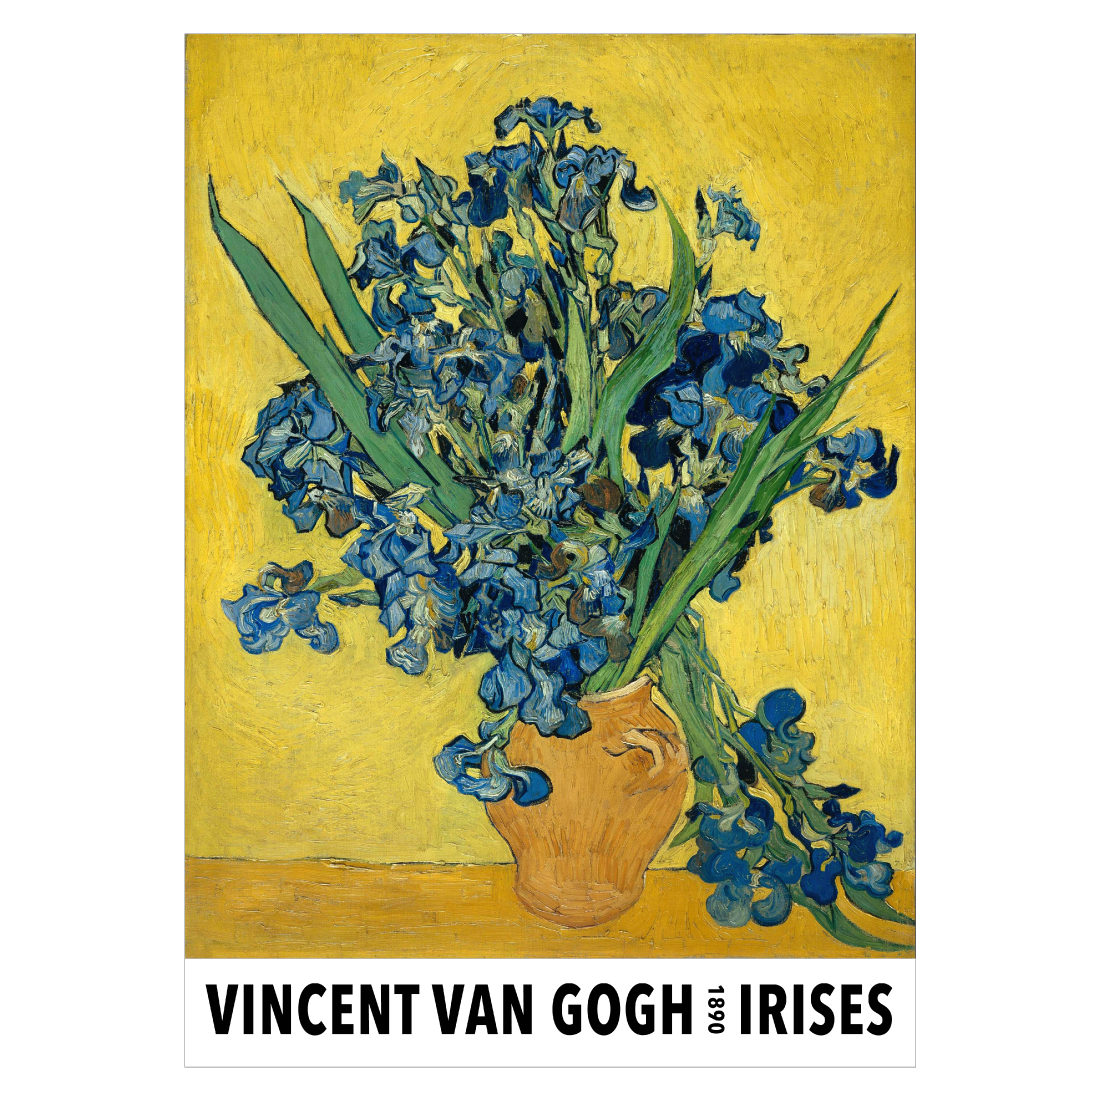 Kunstplakat med Vincent van Gogh "Irises"